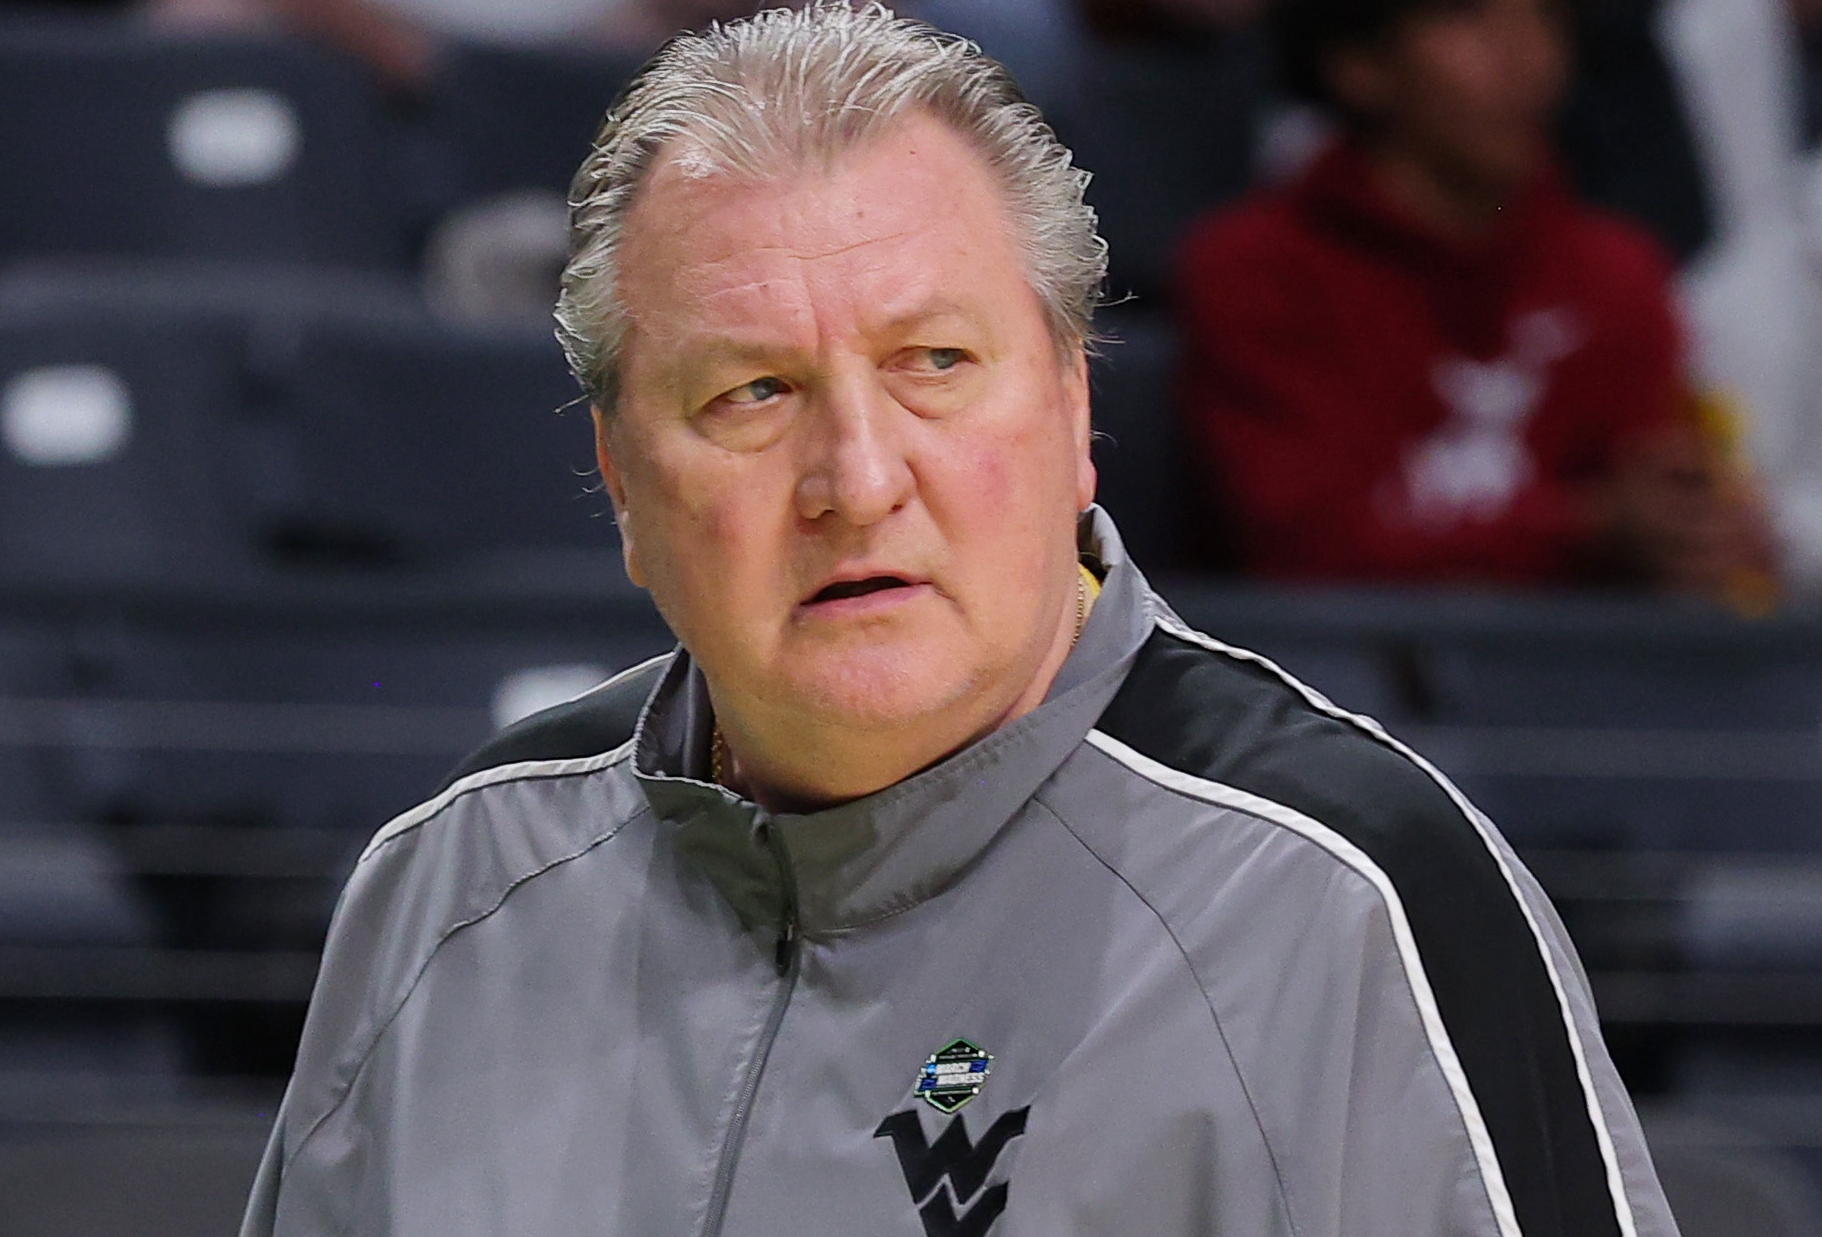 Bob Huggins wants to go back to coaching West Virginia